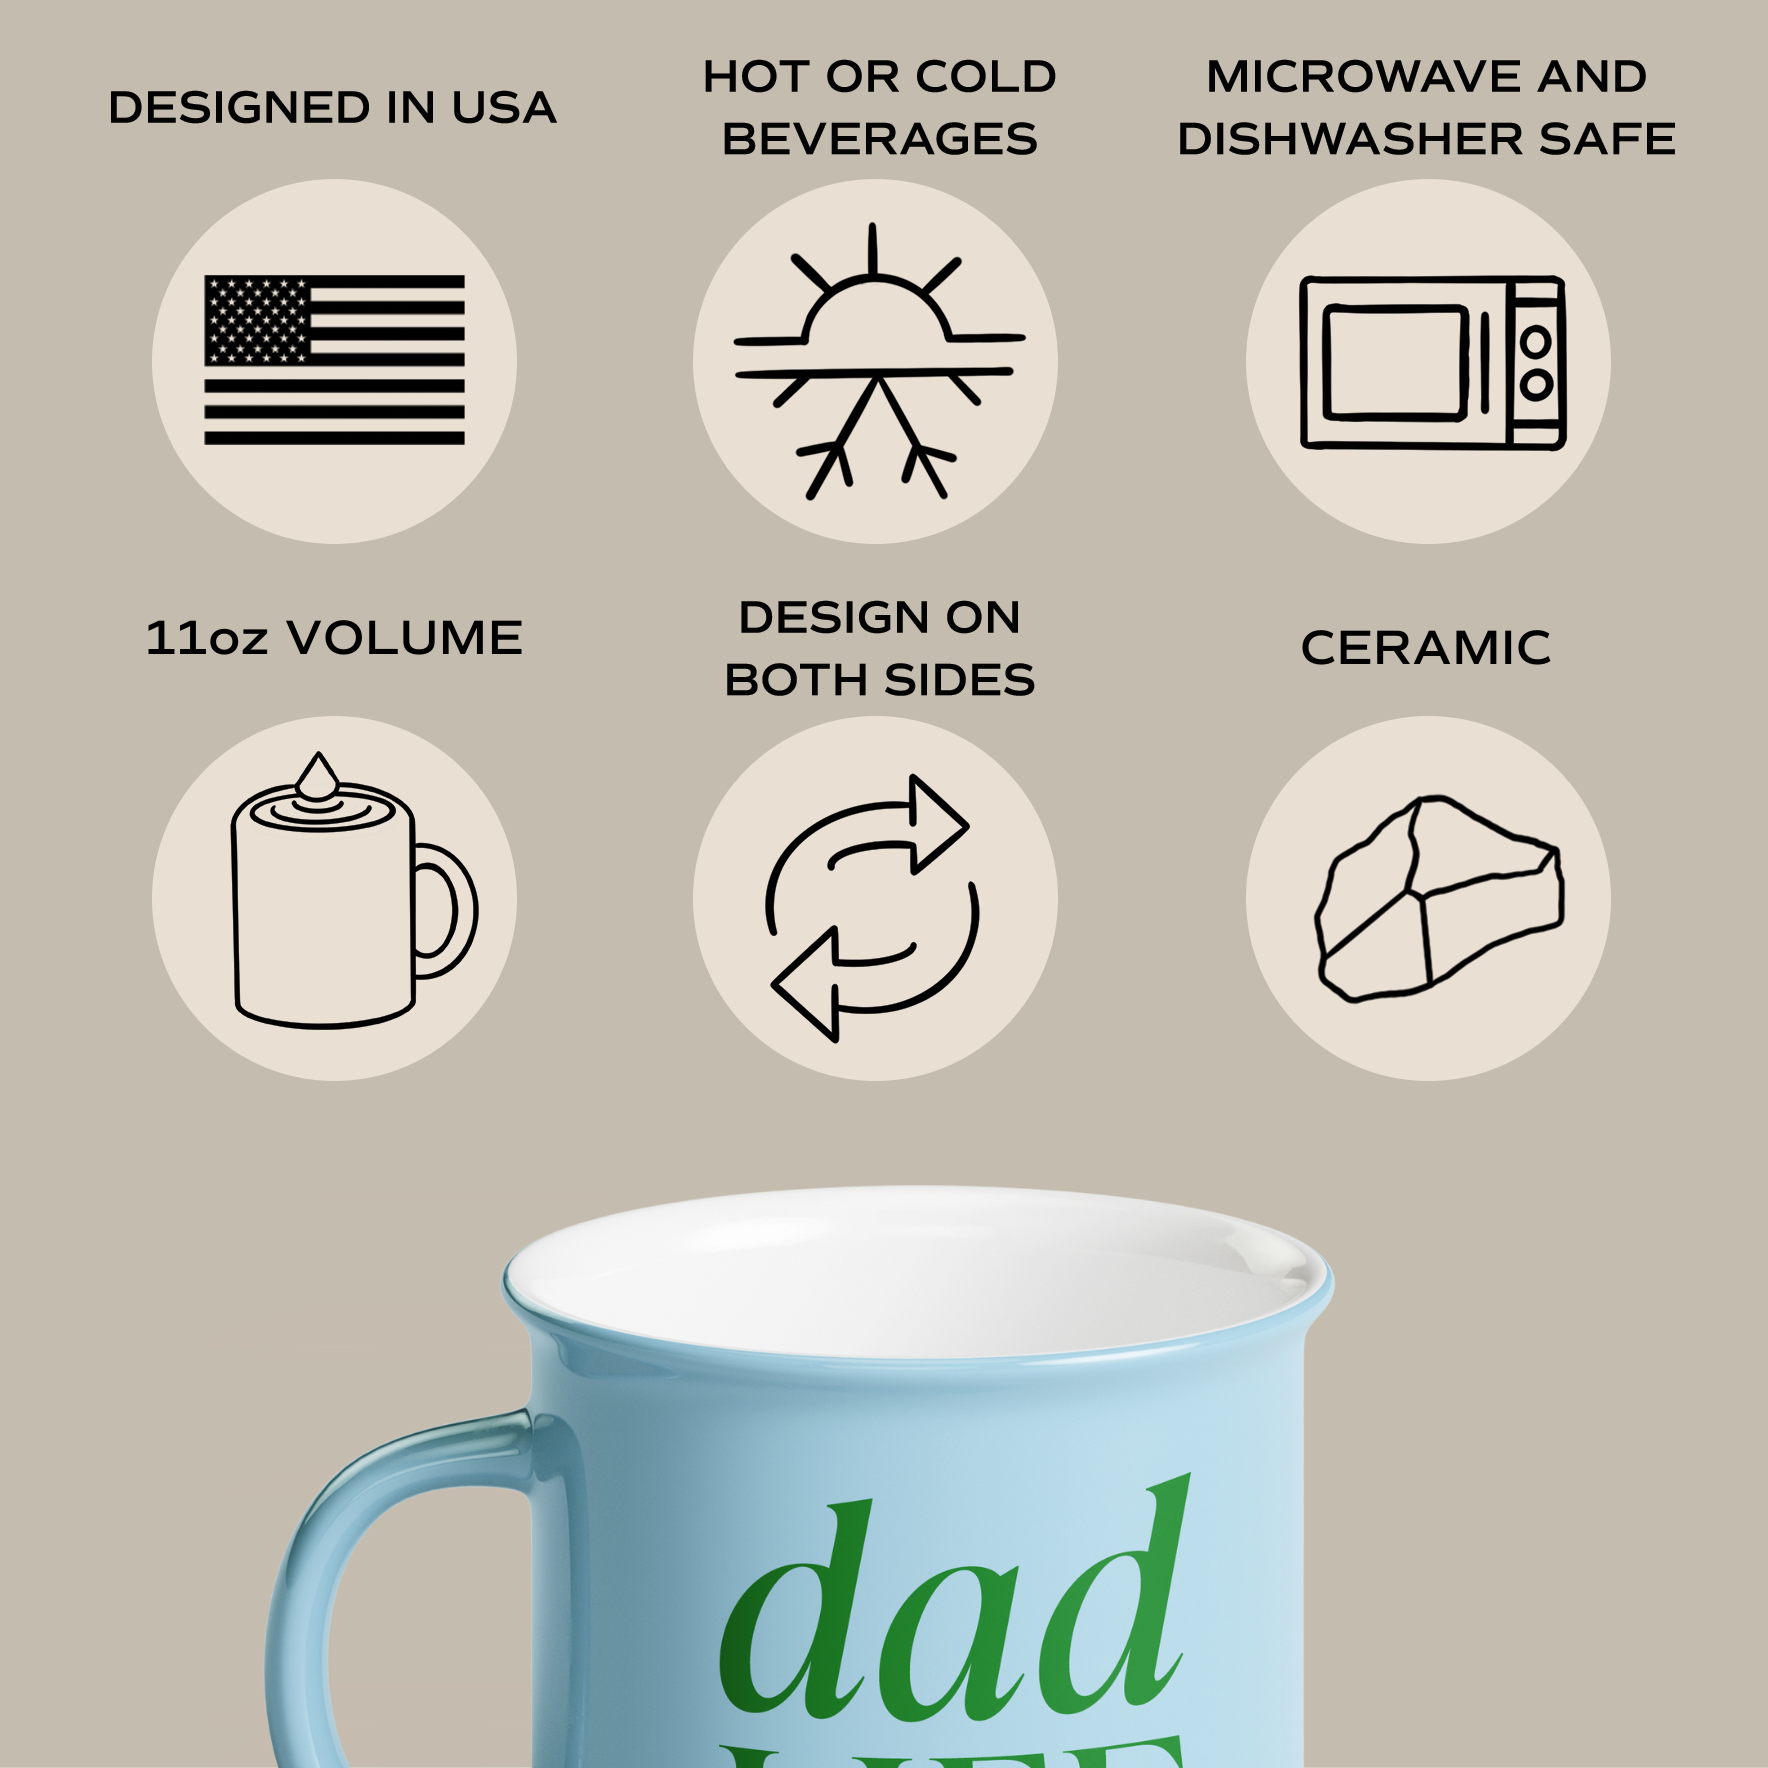 Dad Life 11oz. Campfire Coffee Mug